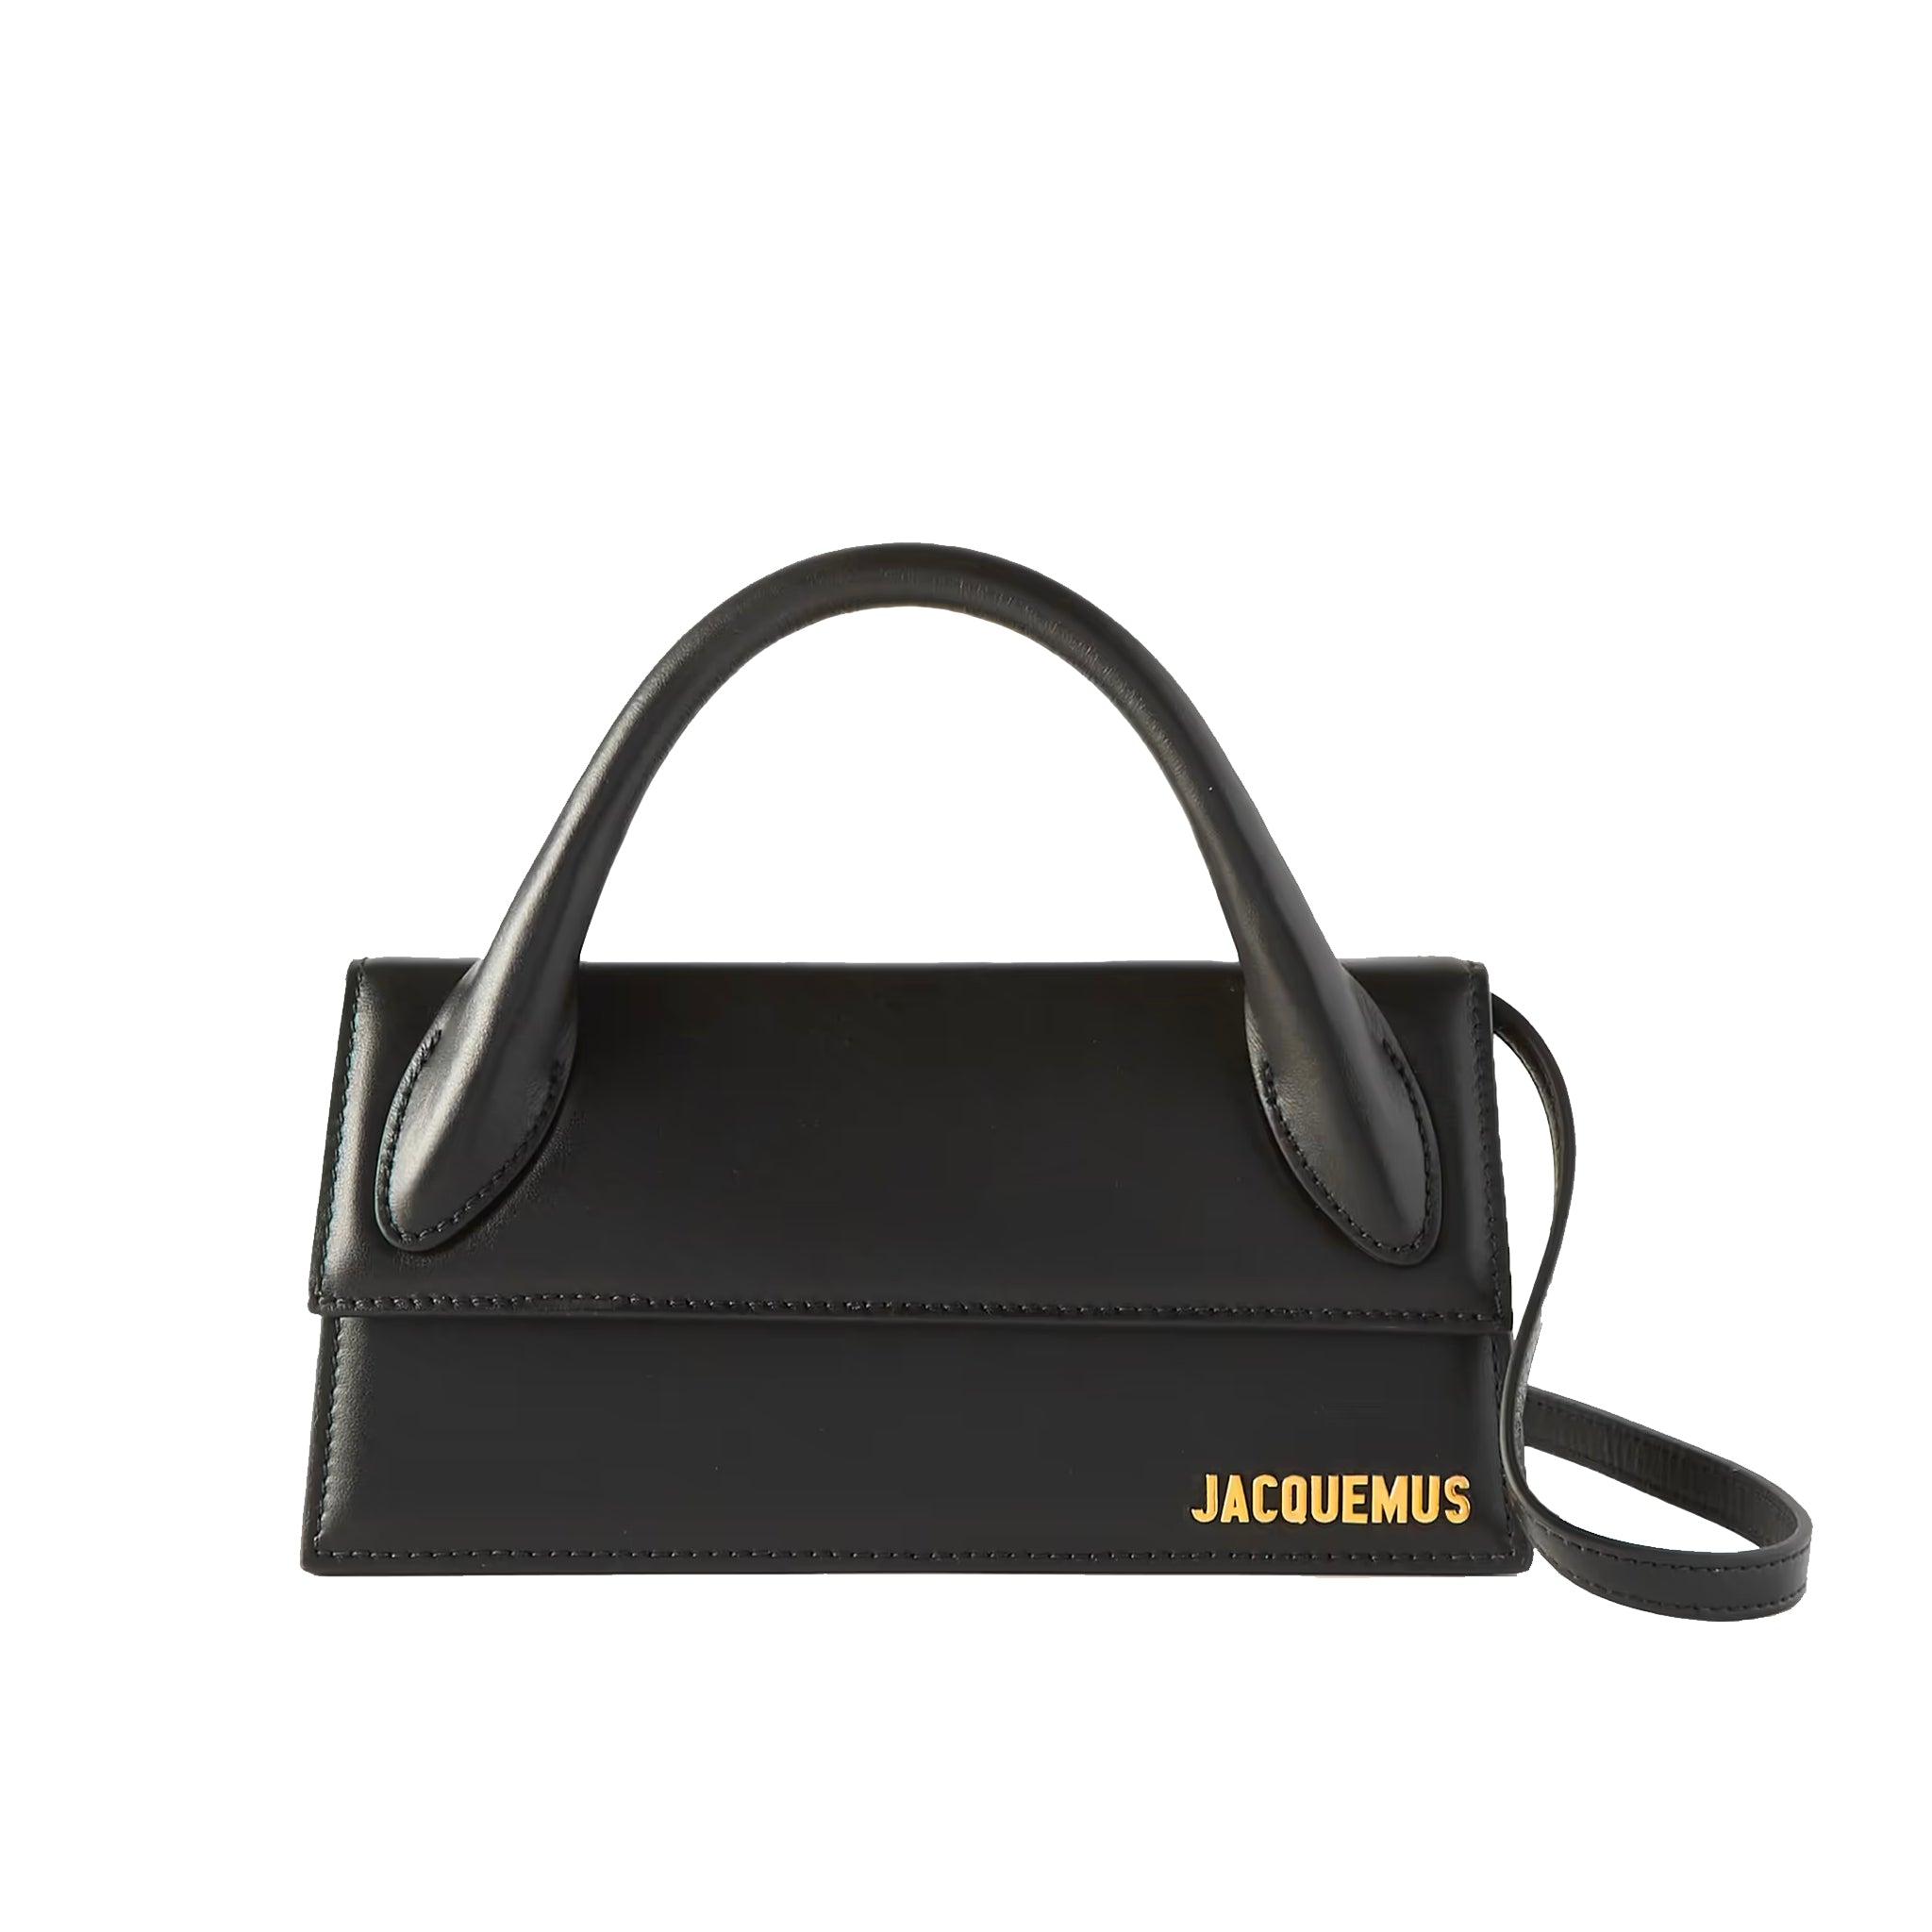 Black 'Le Chiquito Long' shoulder bag Jacquemus - Vitkac HK